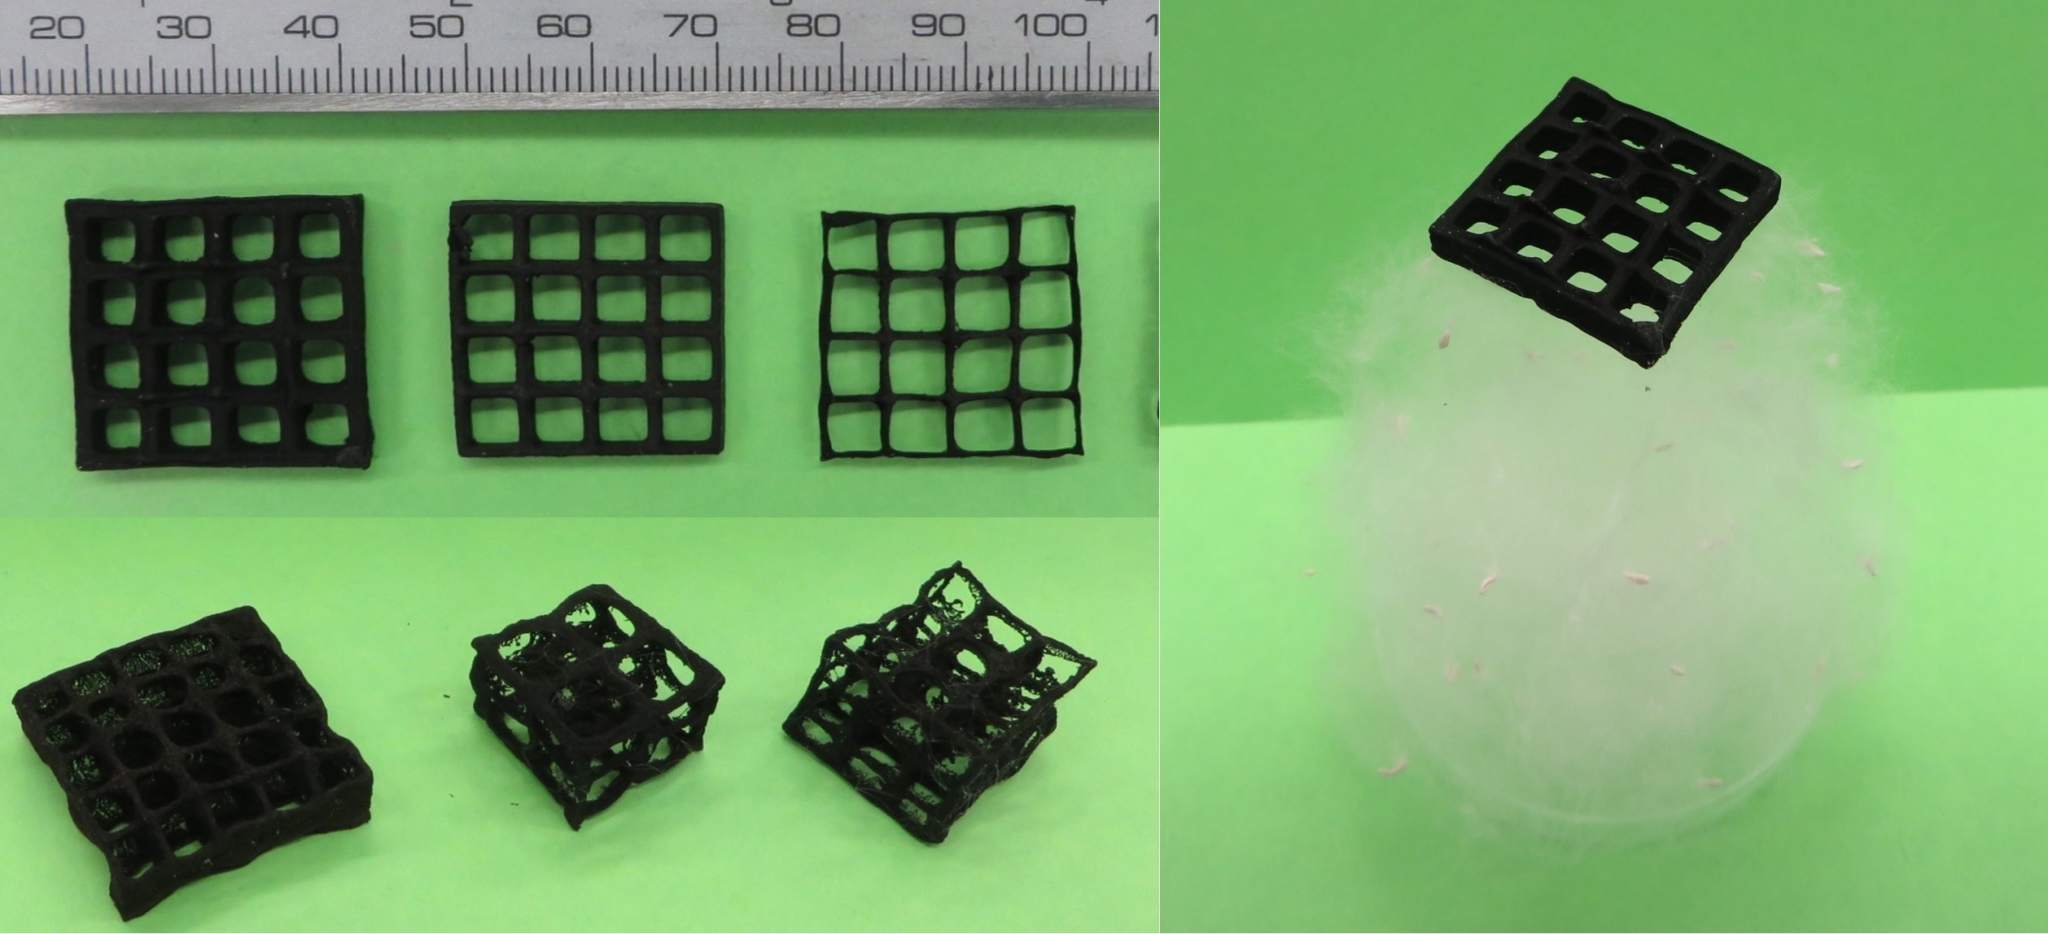 3D printing unlocks huge potential of aerogel structures